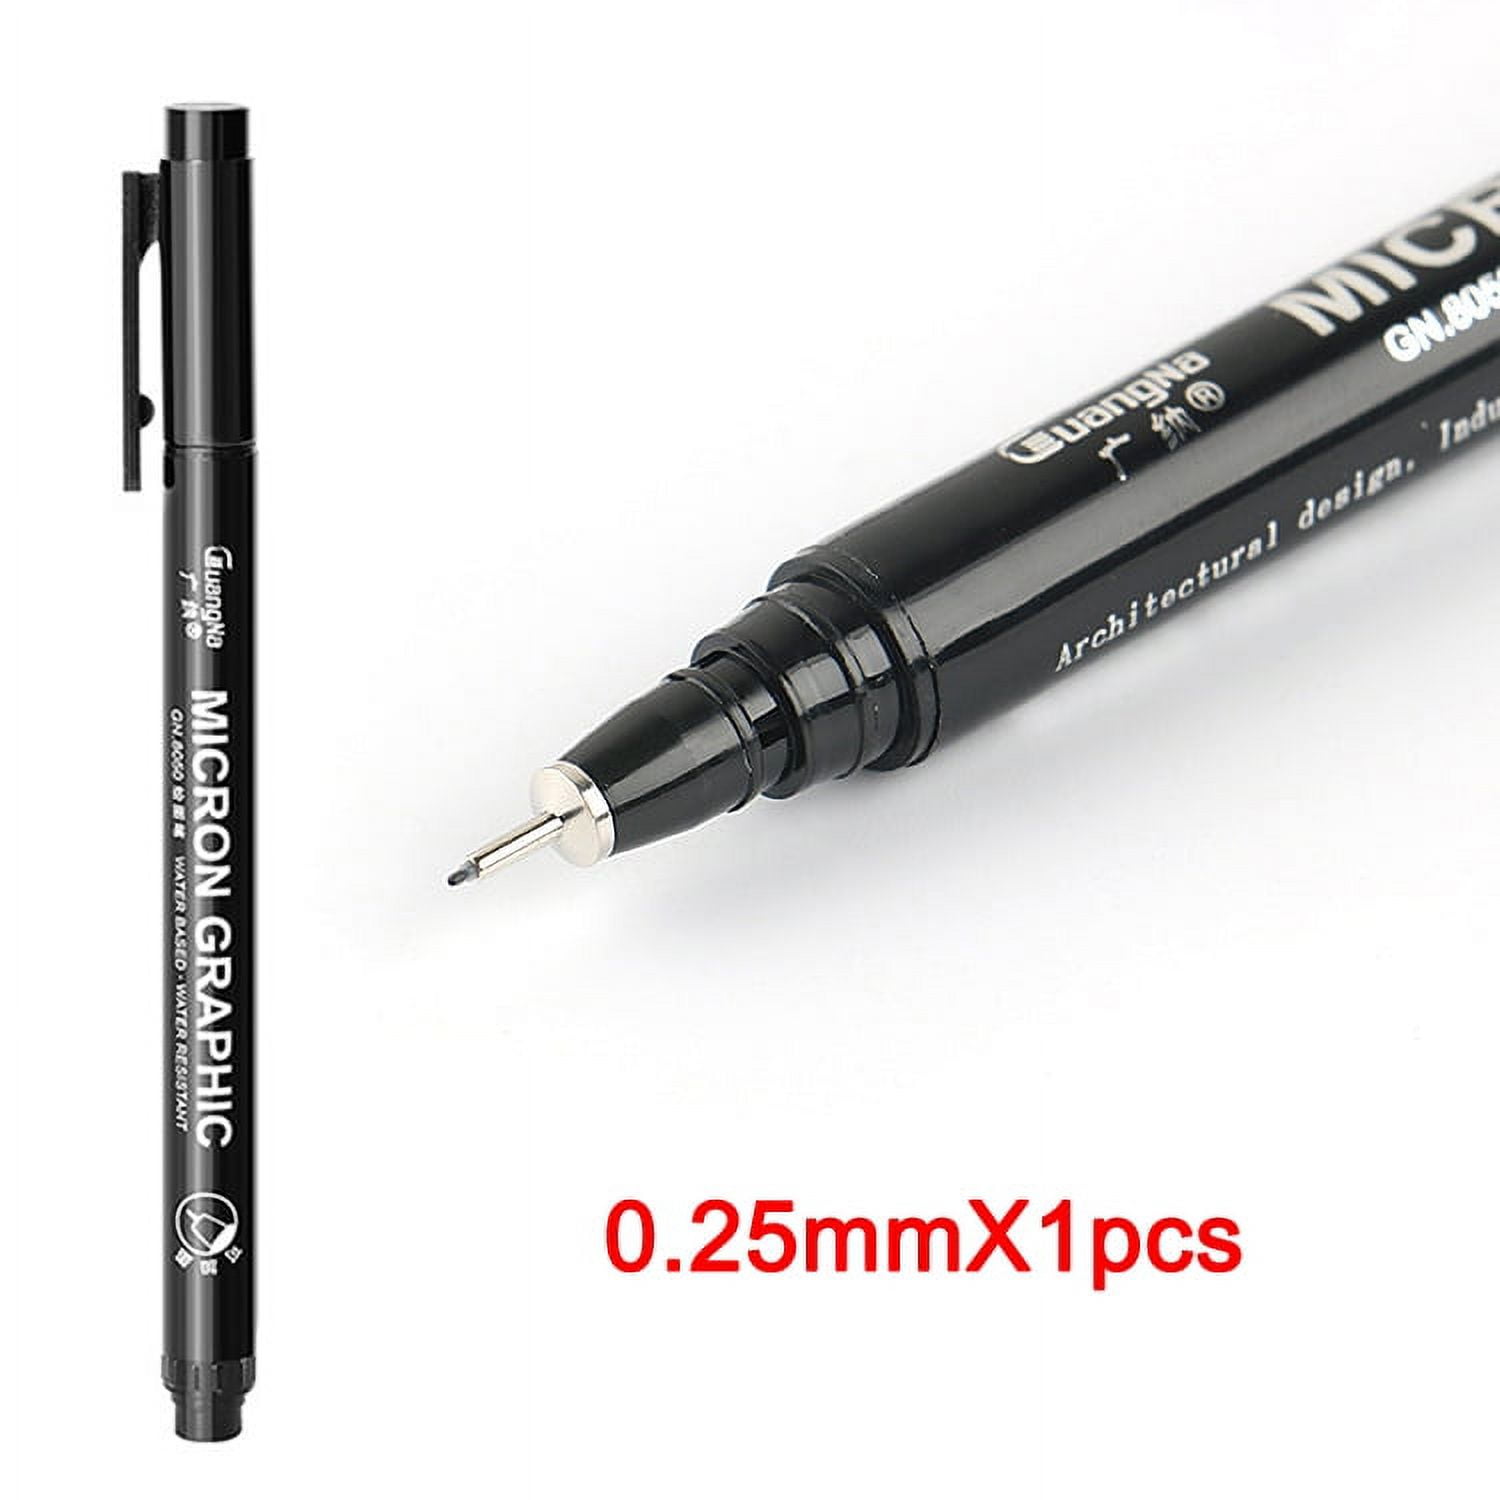 Mr. Pen- Fineliner Pens, 0.2 mm, 6 Pack, Ultra Fine, No Bleed, Bible